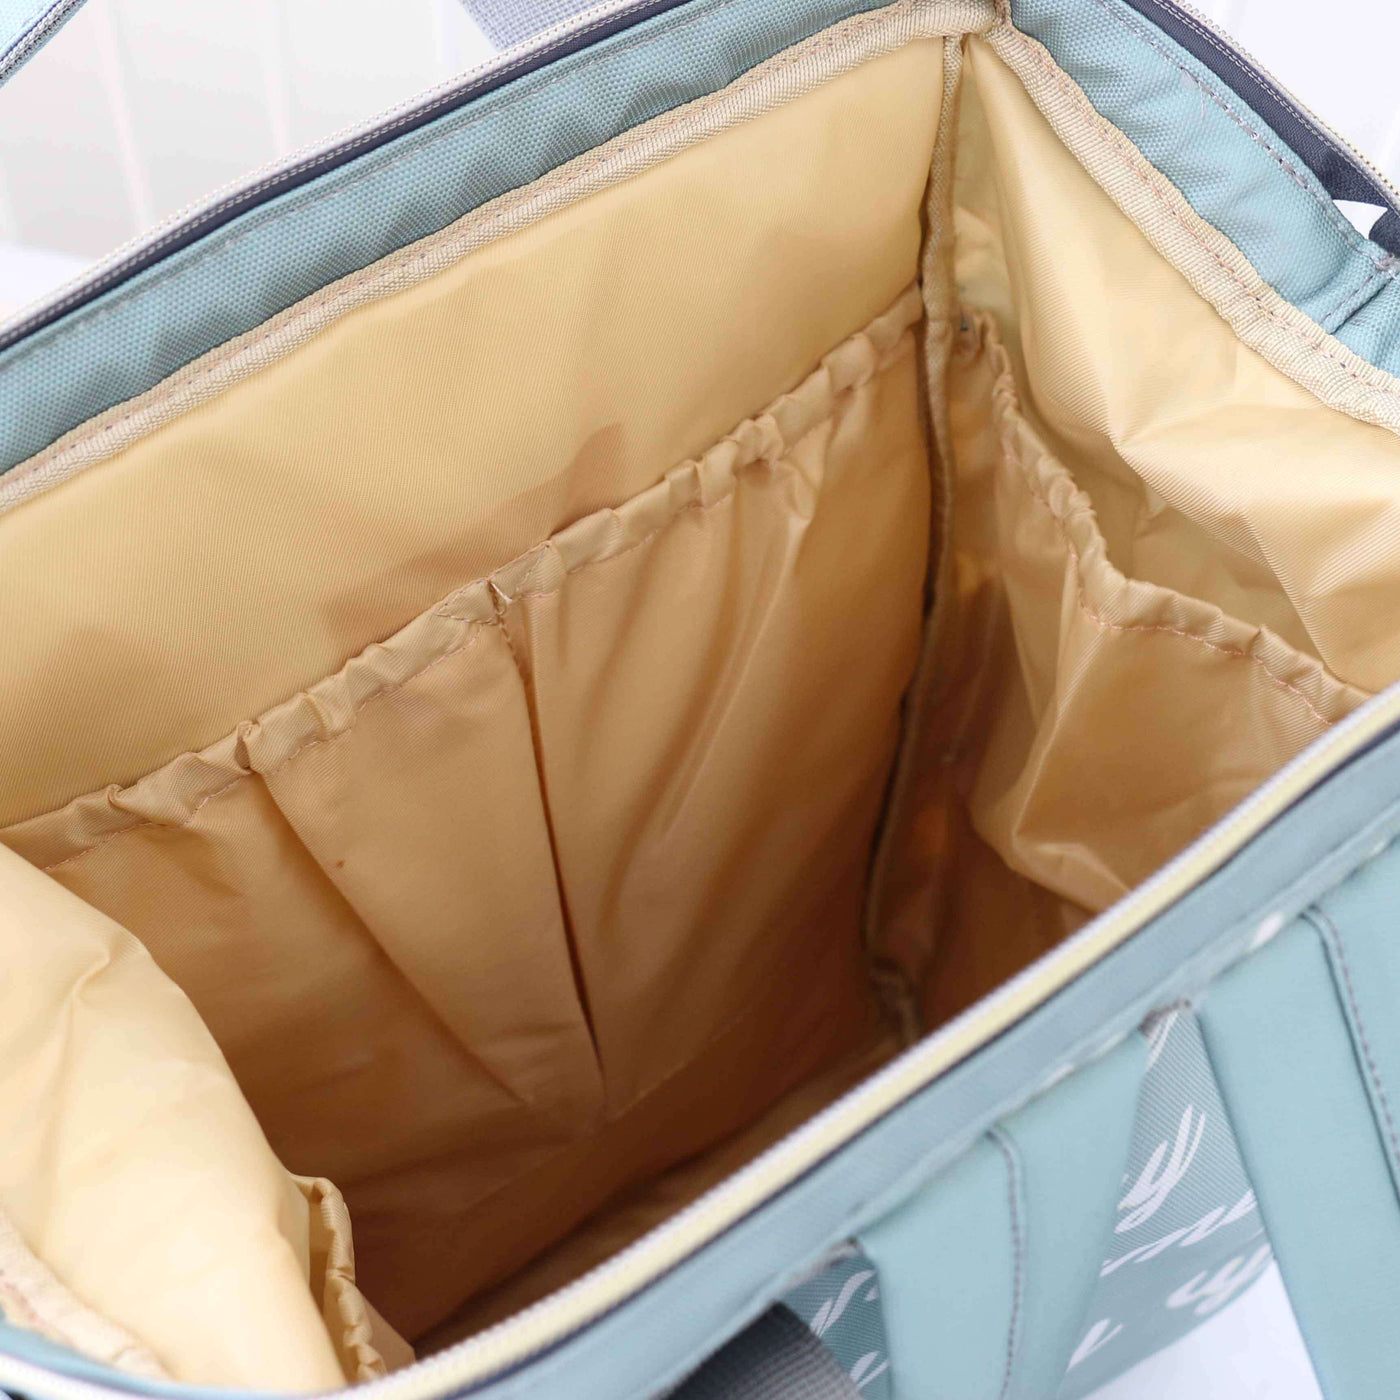 personalized diaper bag backpack interior